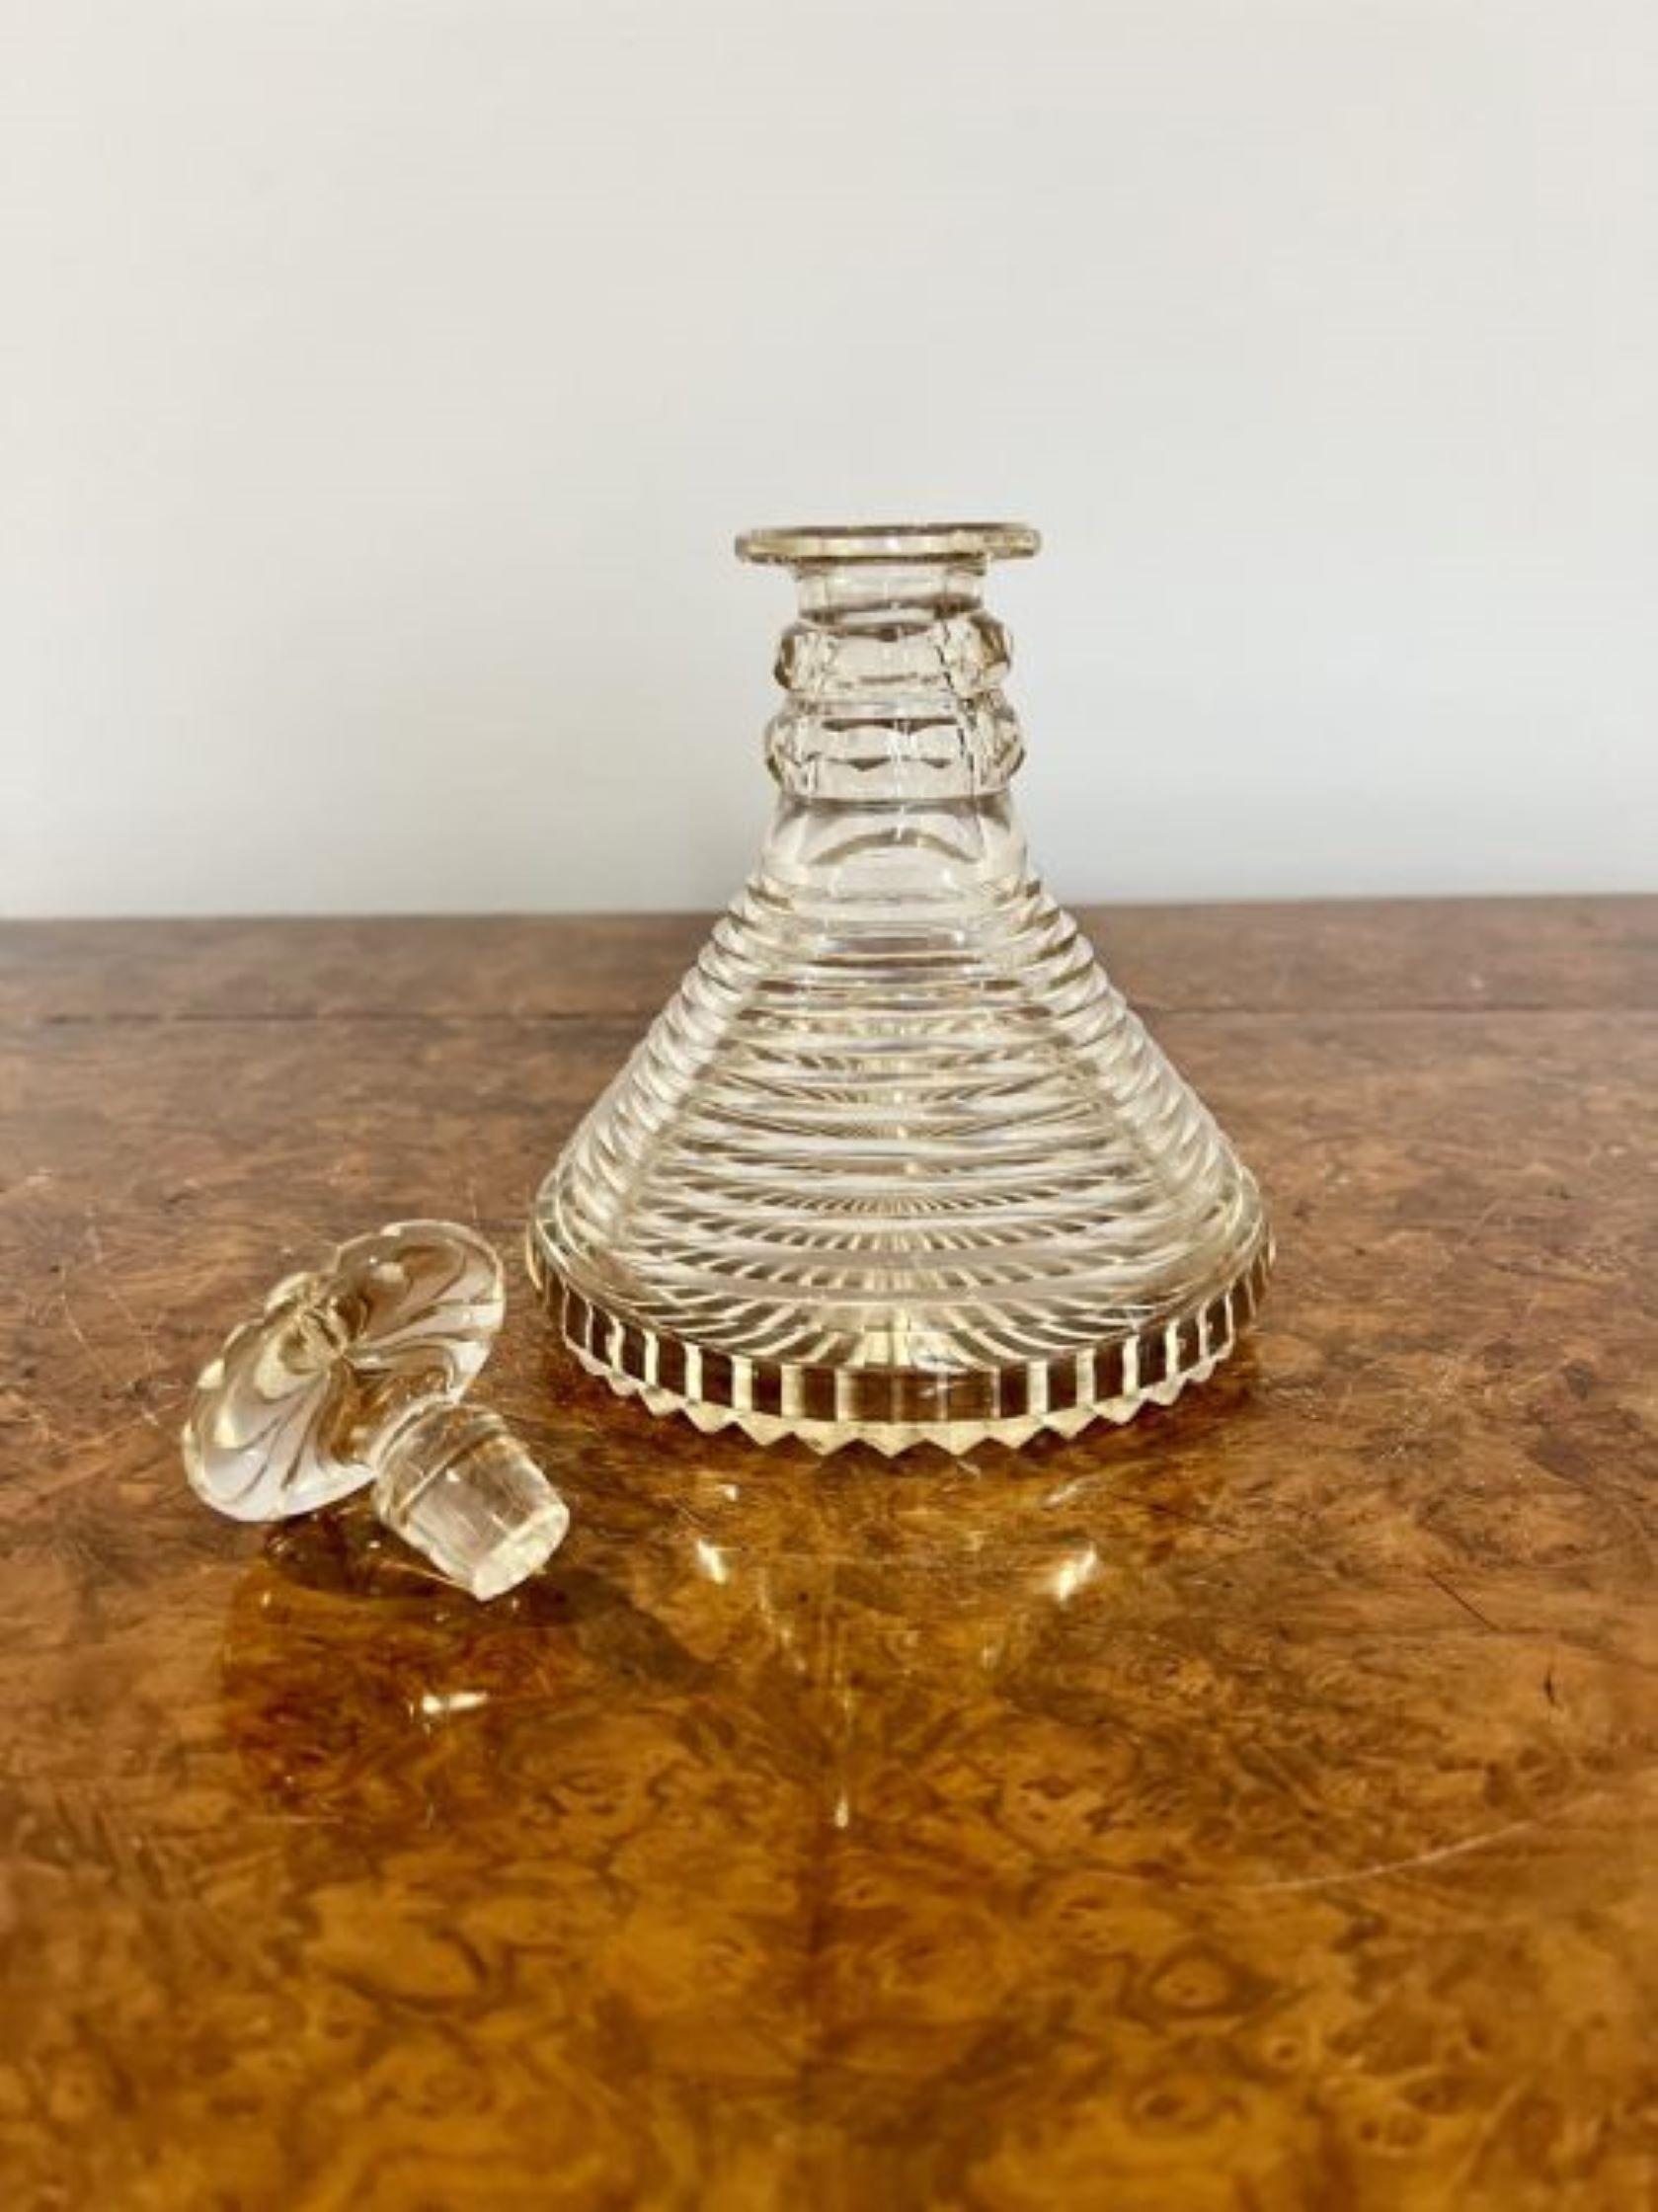 Unusual pair of quality George III cut glass ships decanters, having a quality pair of George III cut glass decanters with mushroom shaped stoppers 